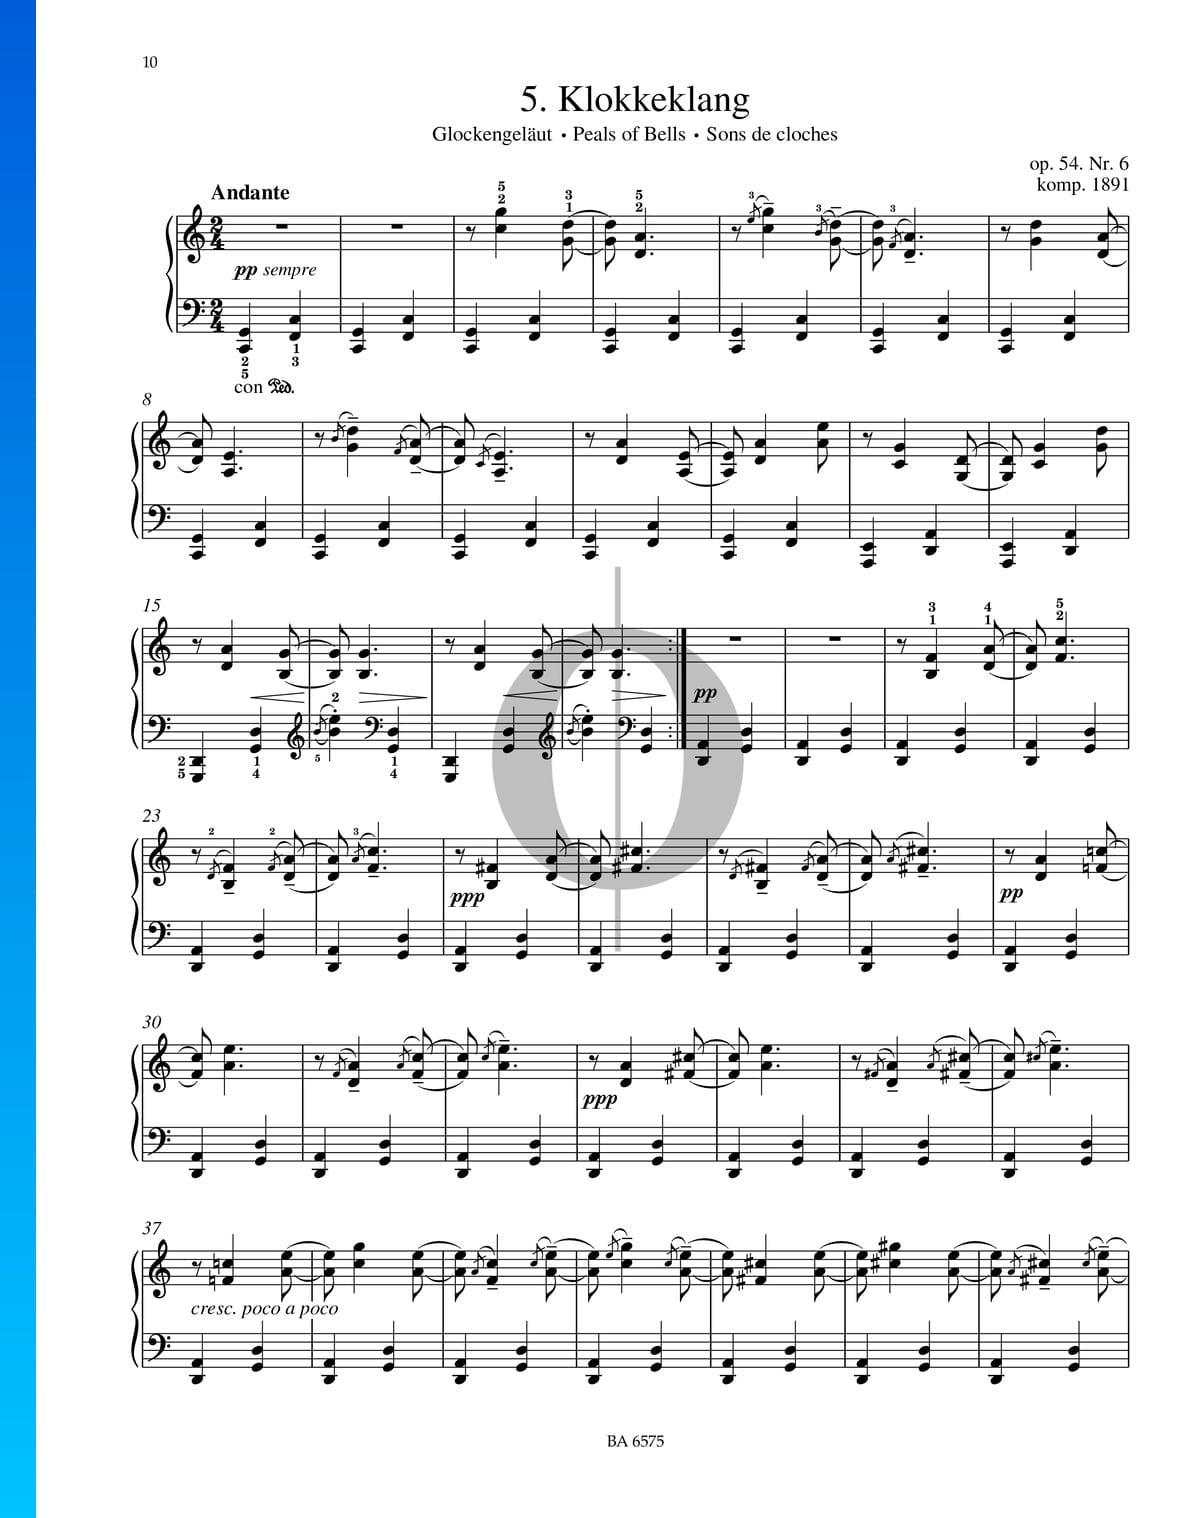 Klokkeklang, Op. 54. No. 6 Sheet Music (Piano)